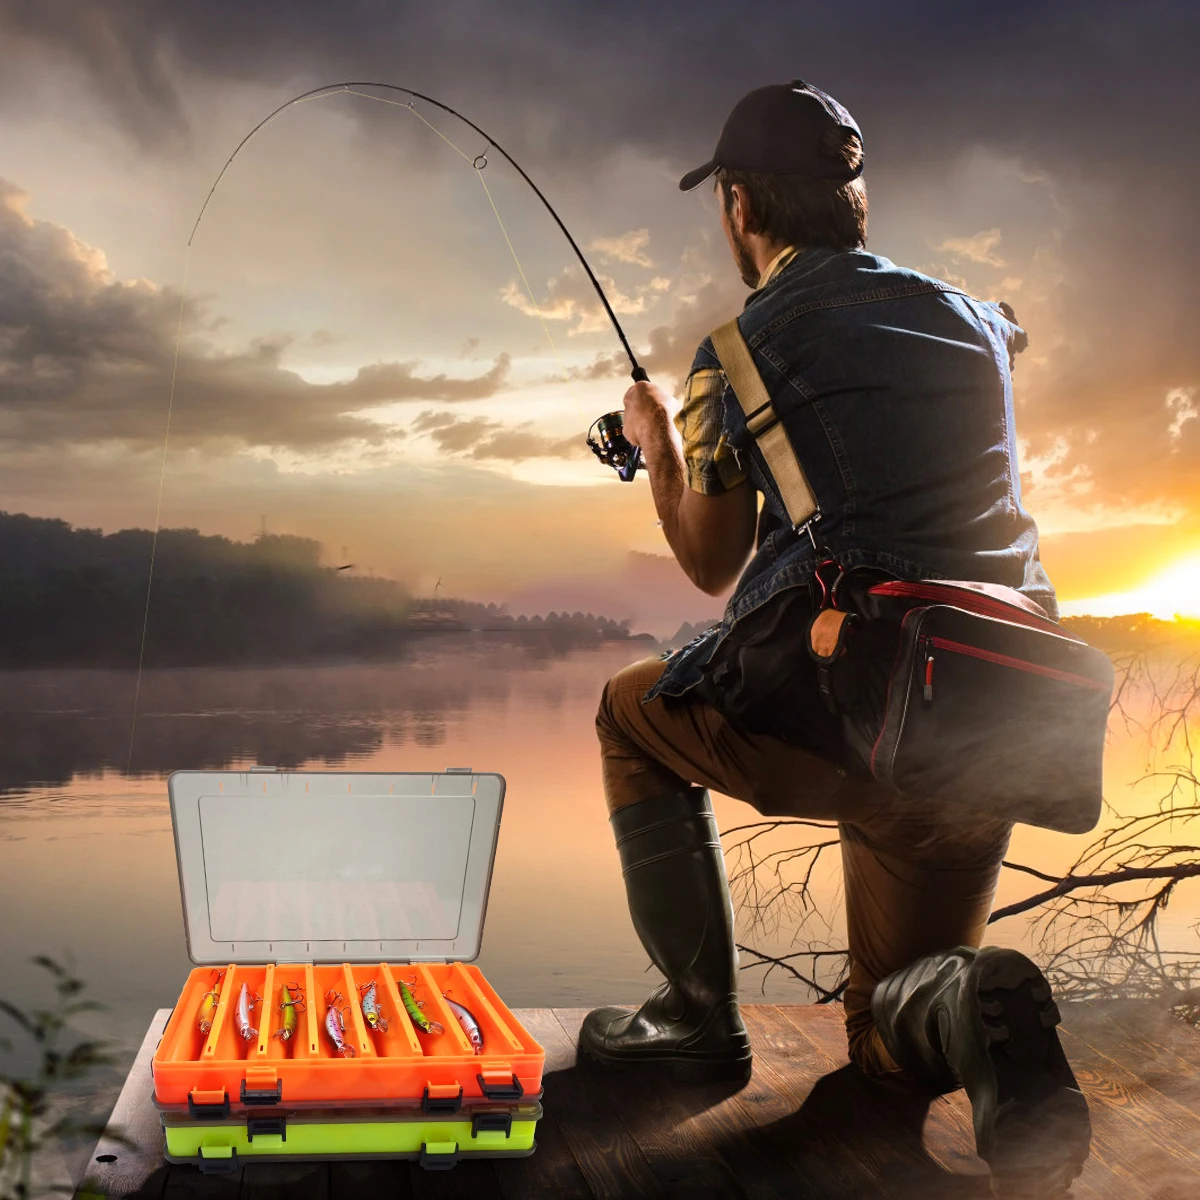 https://ae01.alicdn.com/kf/H78978501cf0540c49ad669339072444e6/Professional-Fishing-Tackle-Box-Double-decker-fishing-lure-tackle-box-Hook-Boxes-Portable-Bait-Fishing-Gear.jpg